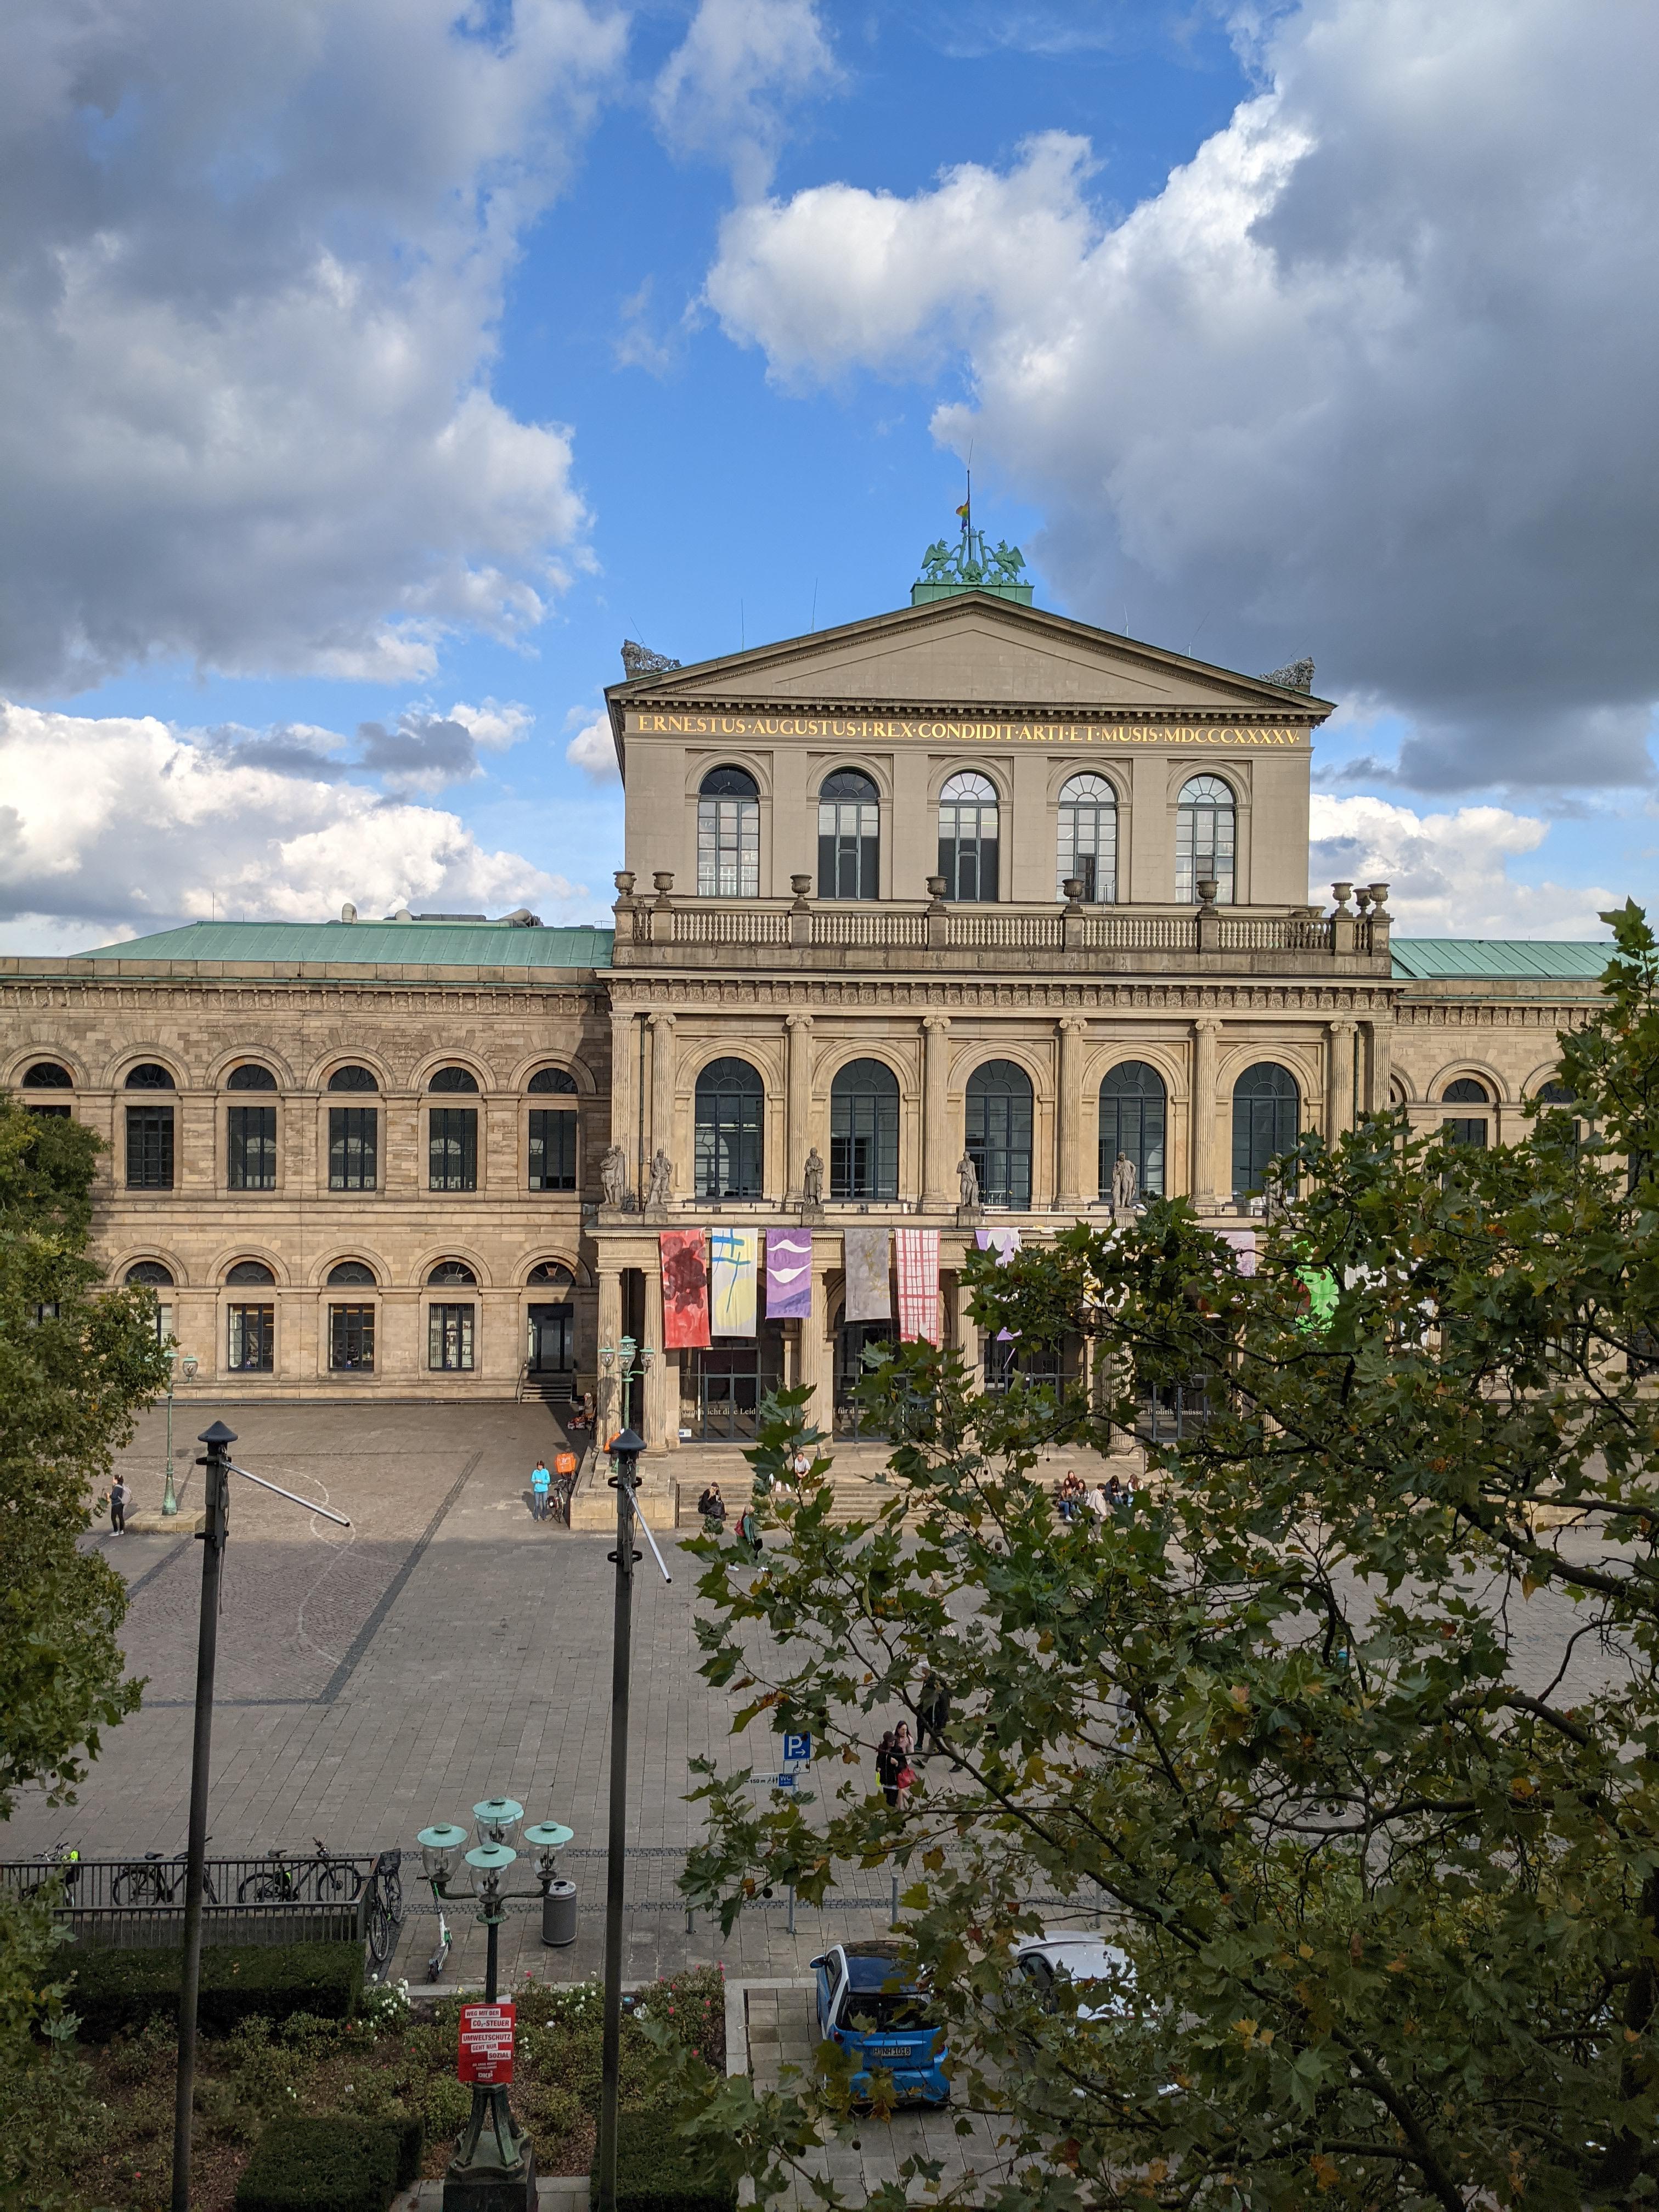 Bilder Office Club Hannover an der Oper